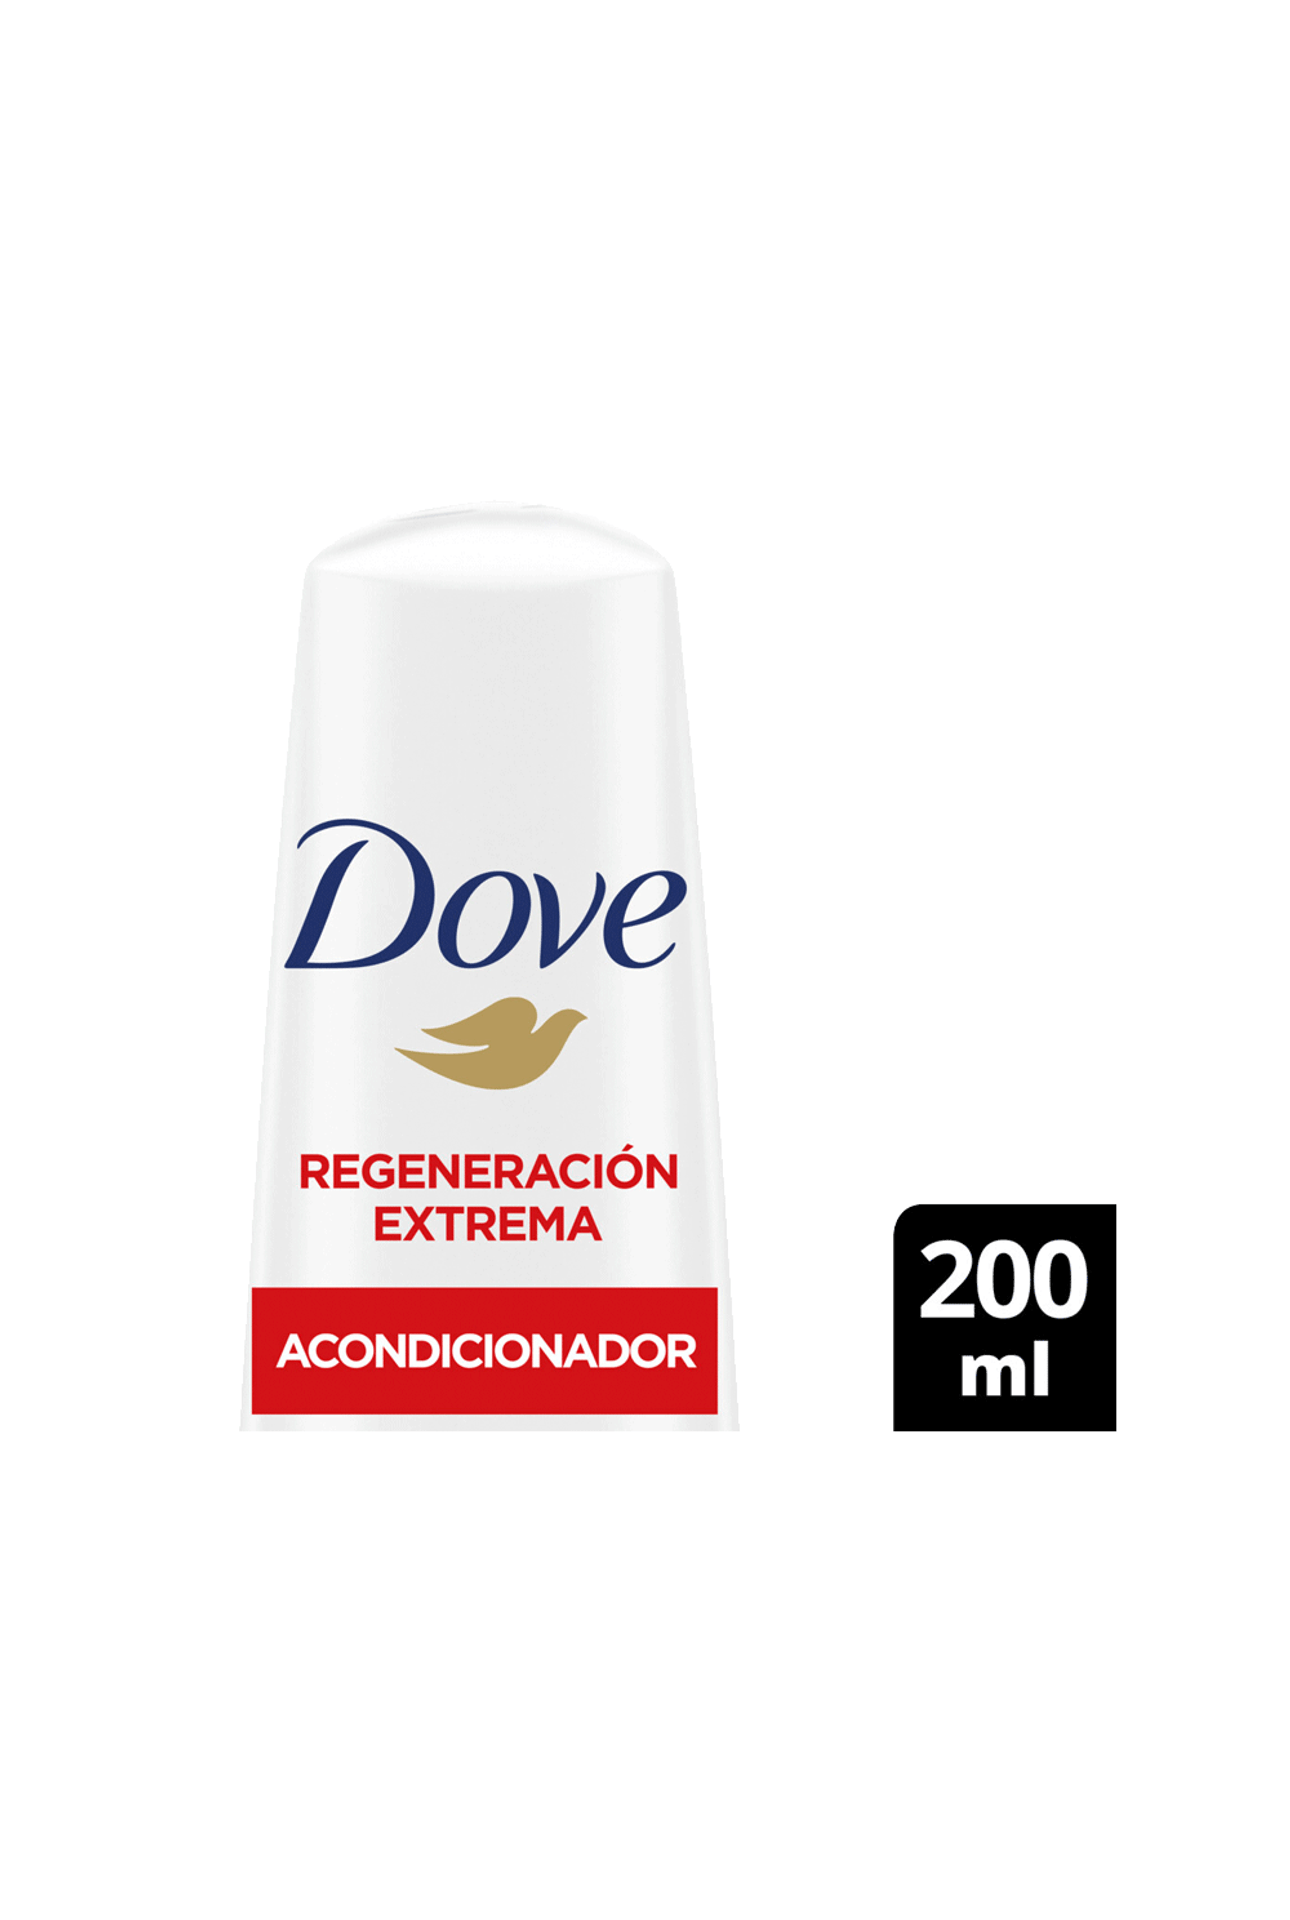 Dove-Acondicionador-Dove-Regeneracion-Extrema-x-200ml-7791293047072_img1